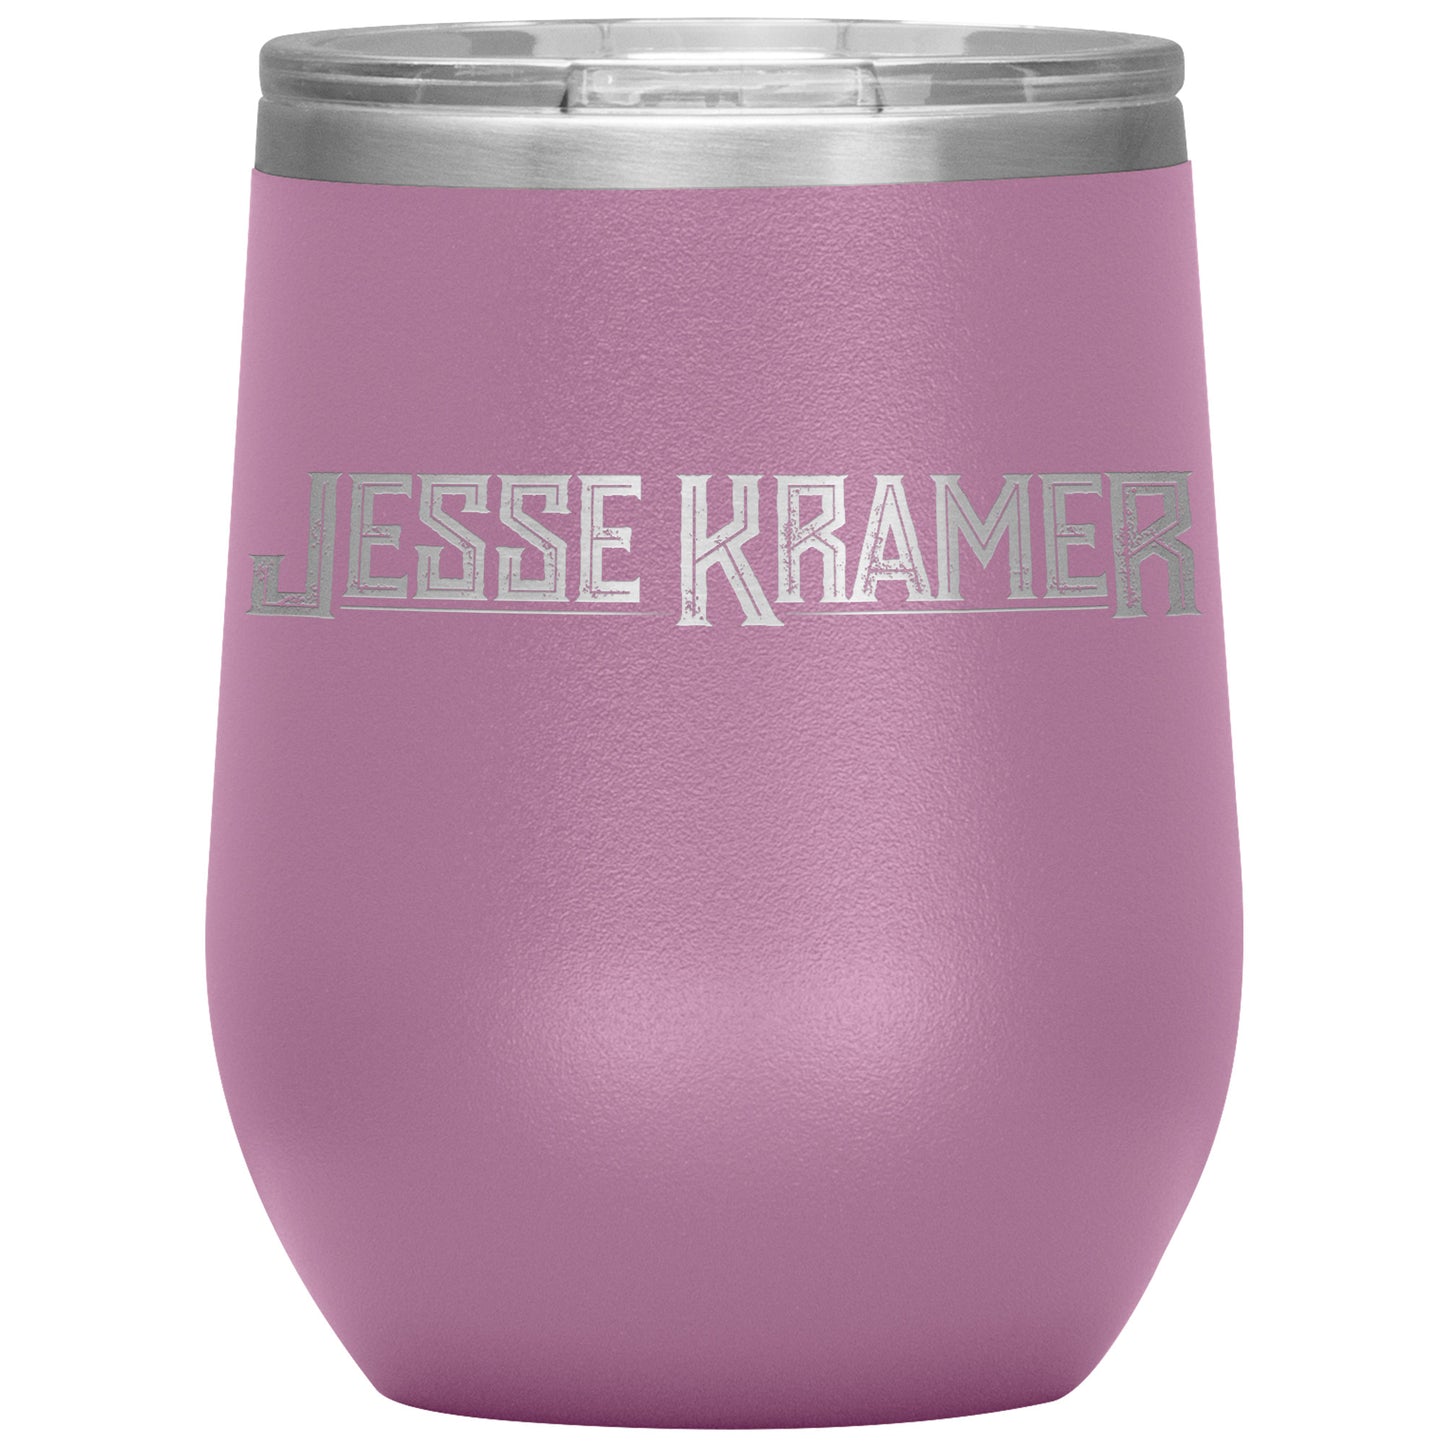 Jesse Kramer 12oz Wine Insulated Tumbler